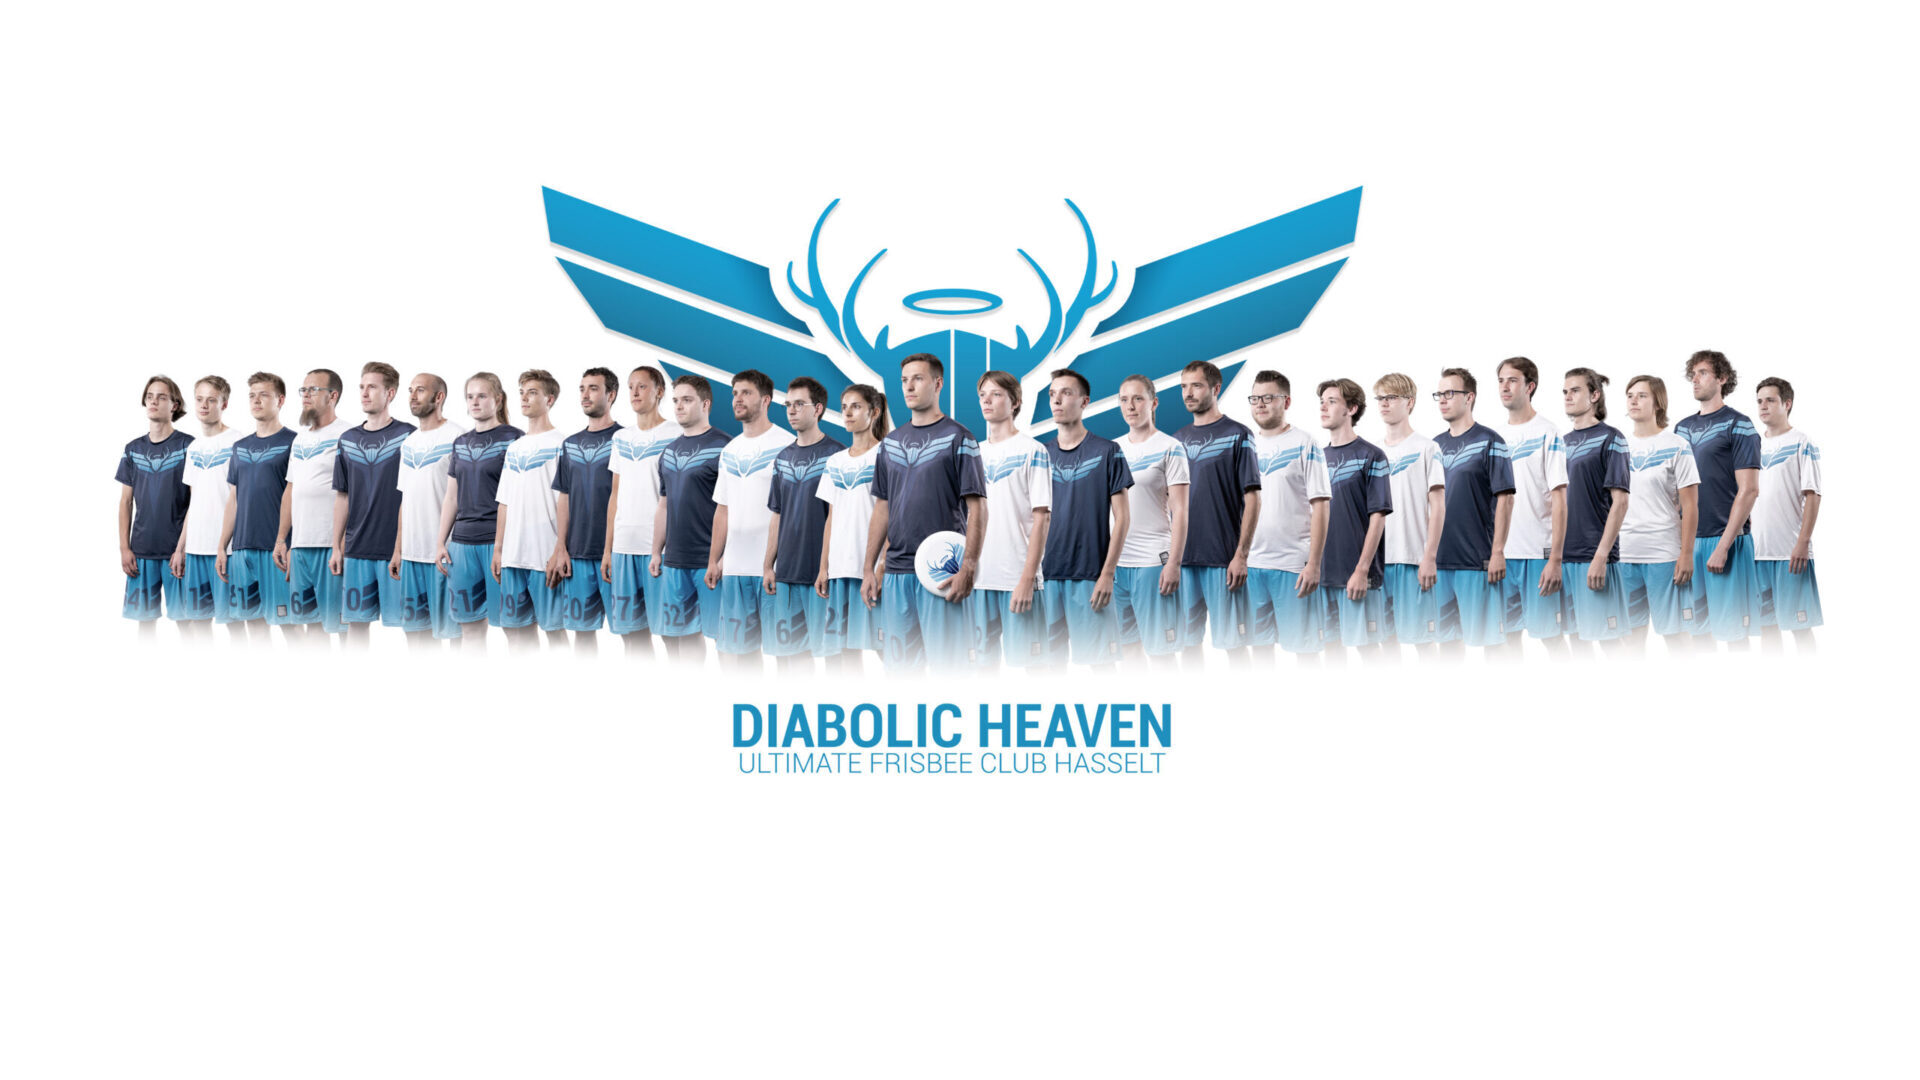 Diabolic Heaven | Ultimate Frisbee Club Hasselt